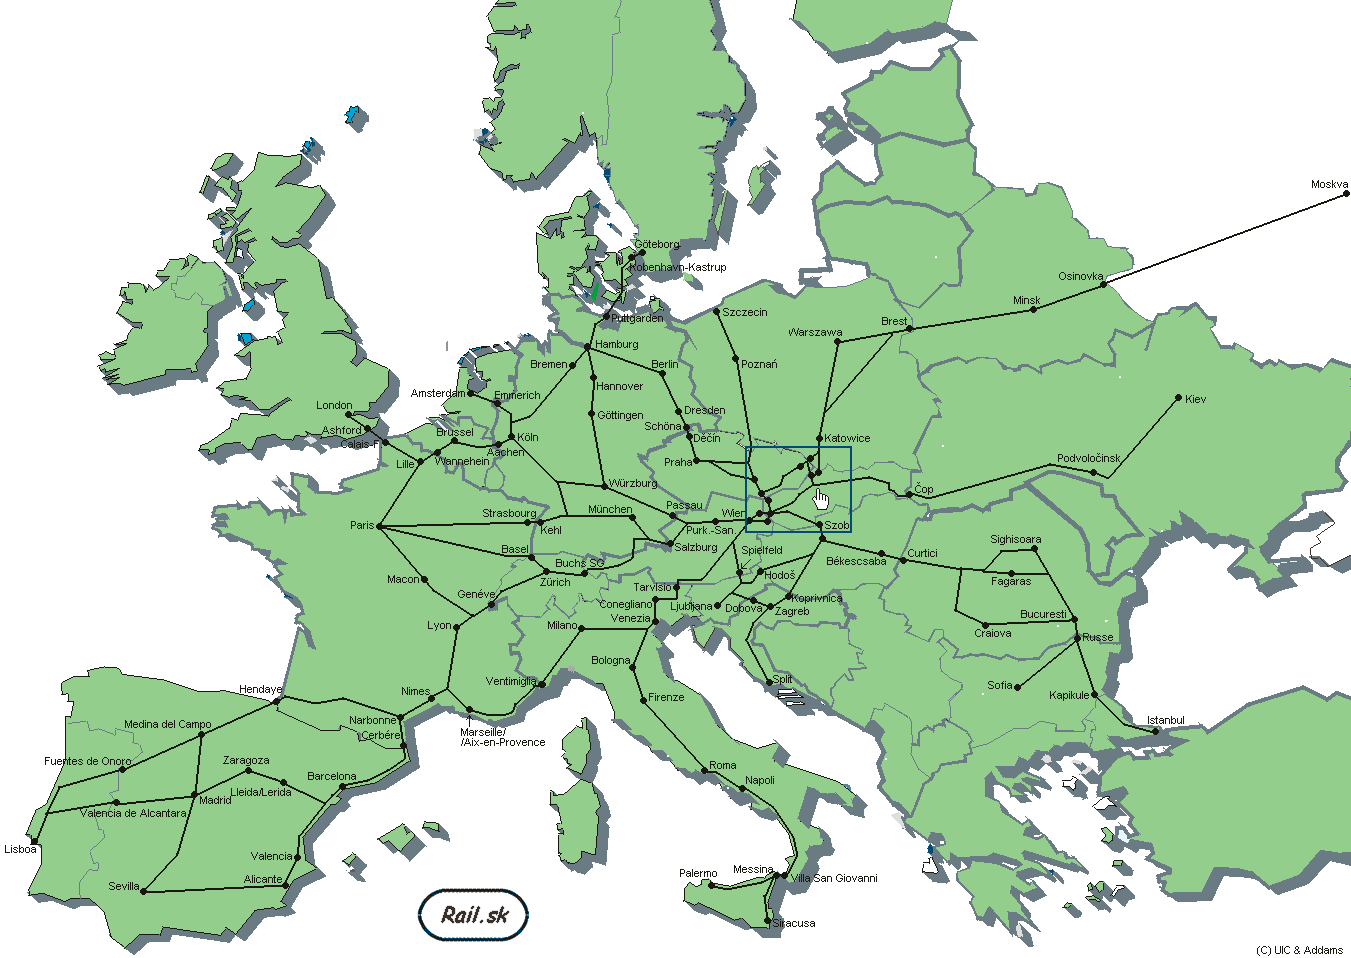 Mapa najastejie pouvanch trs pri cestovan do vch miest Eurpy